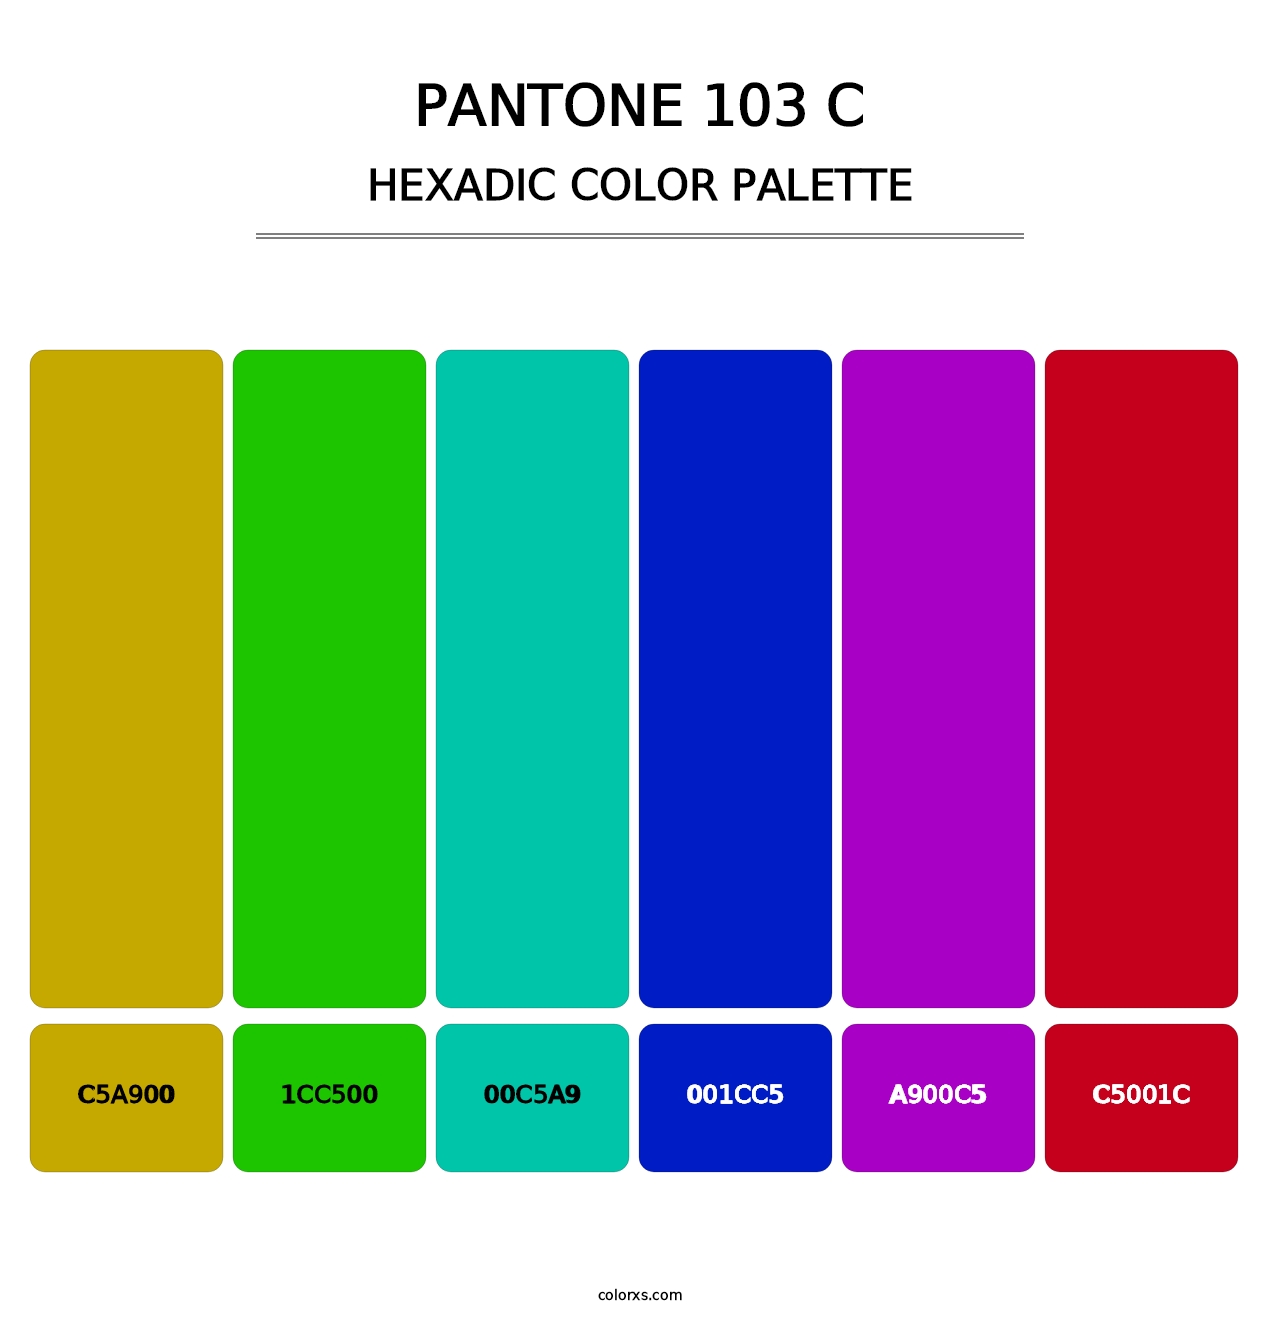 PANTONE 103 C - Hexadic Color Palette